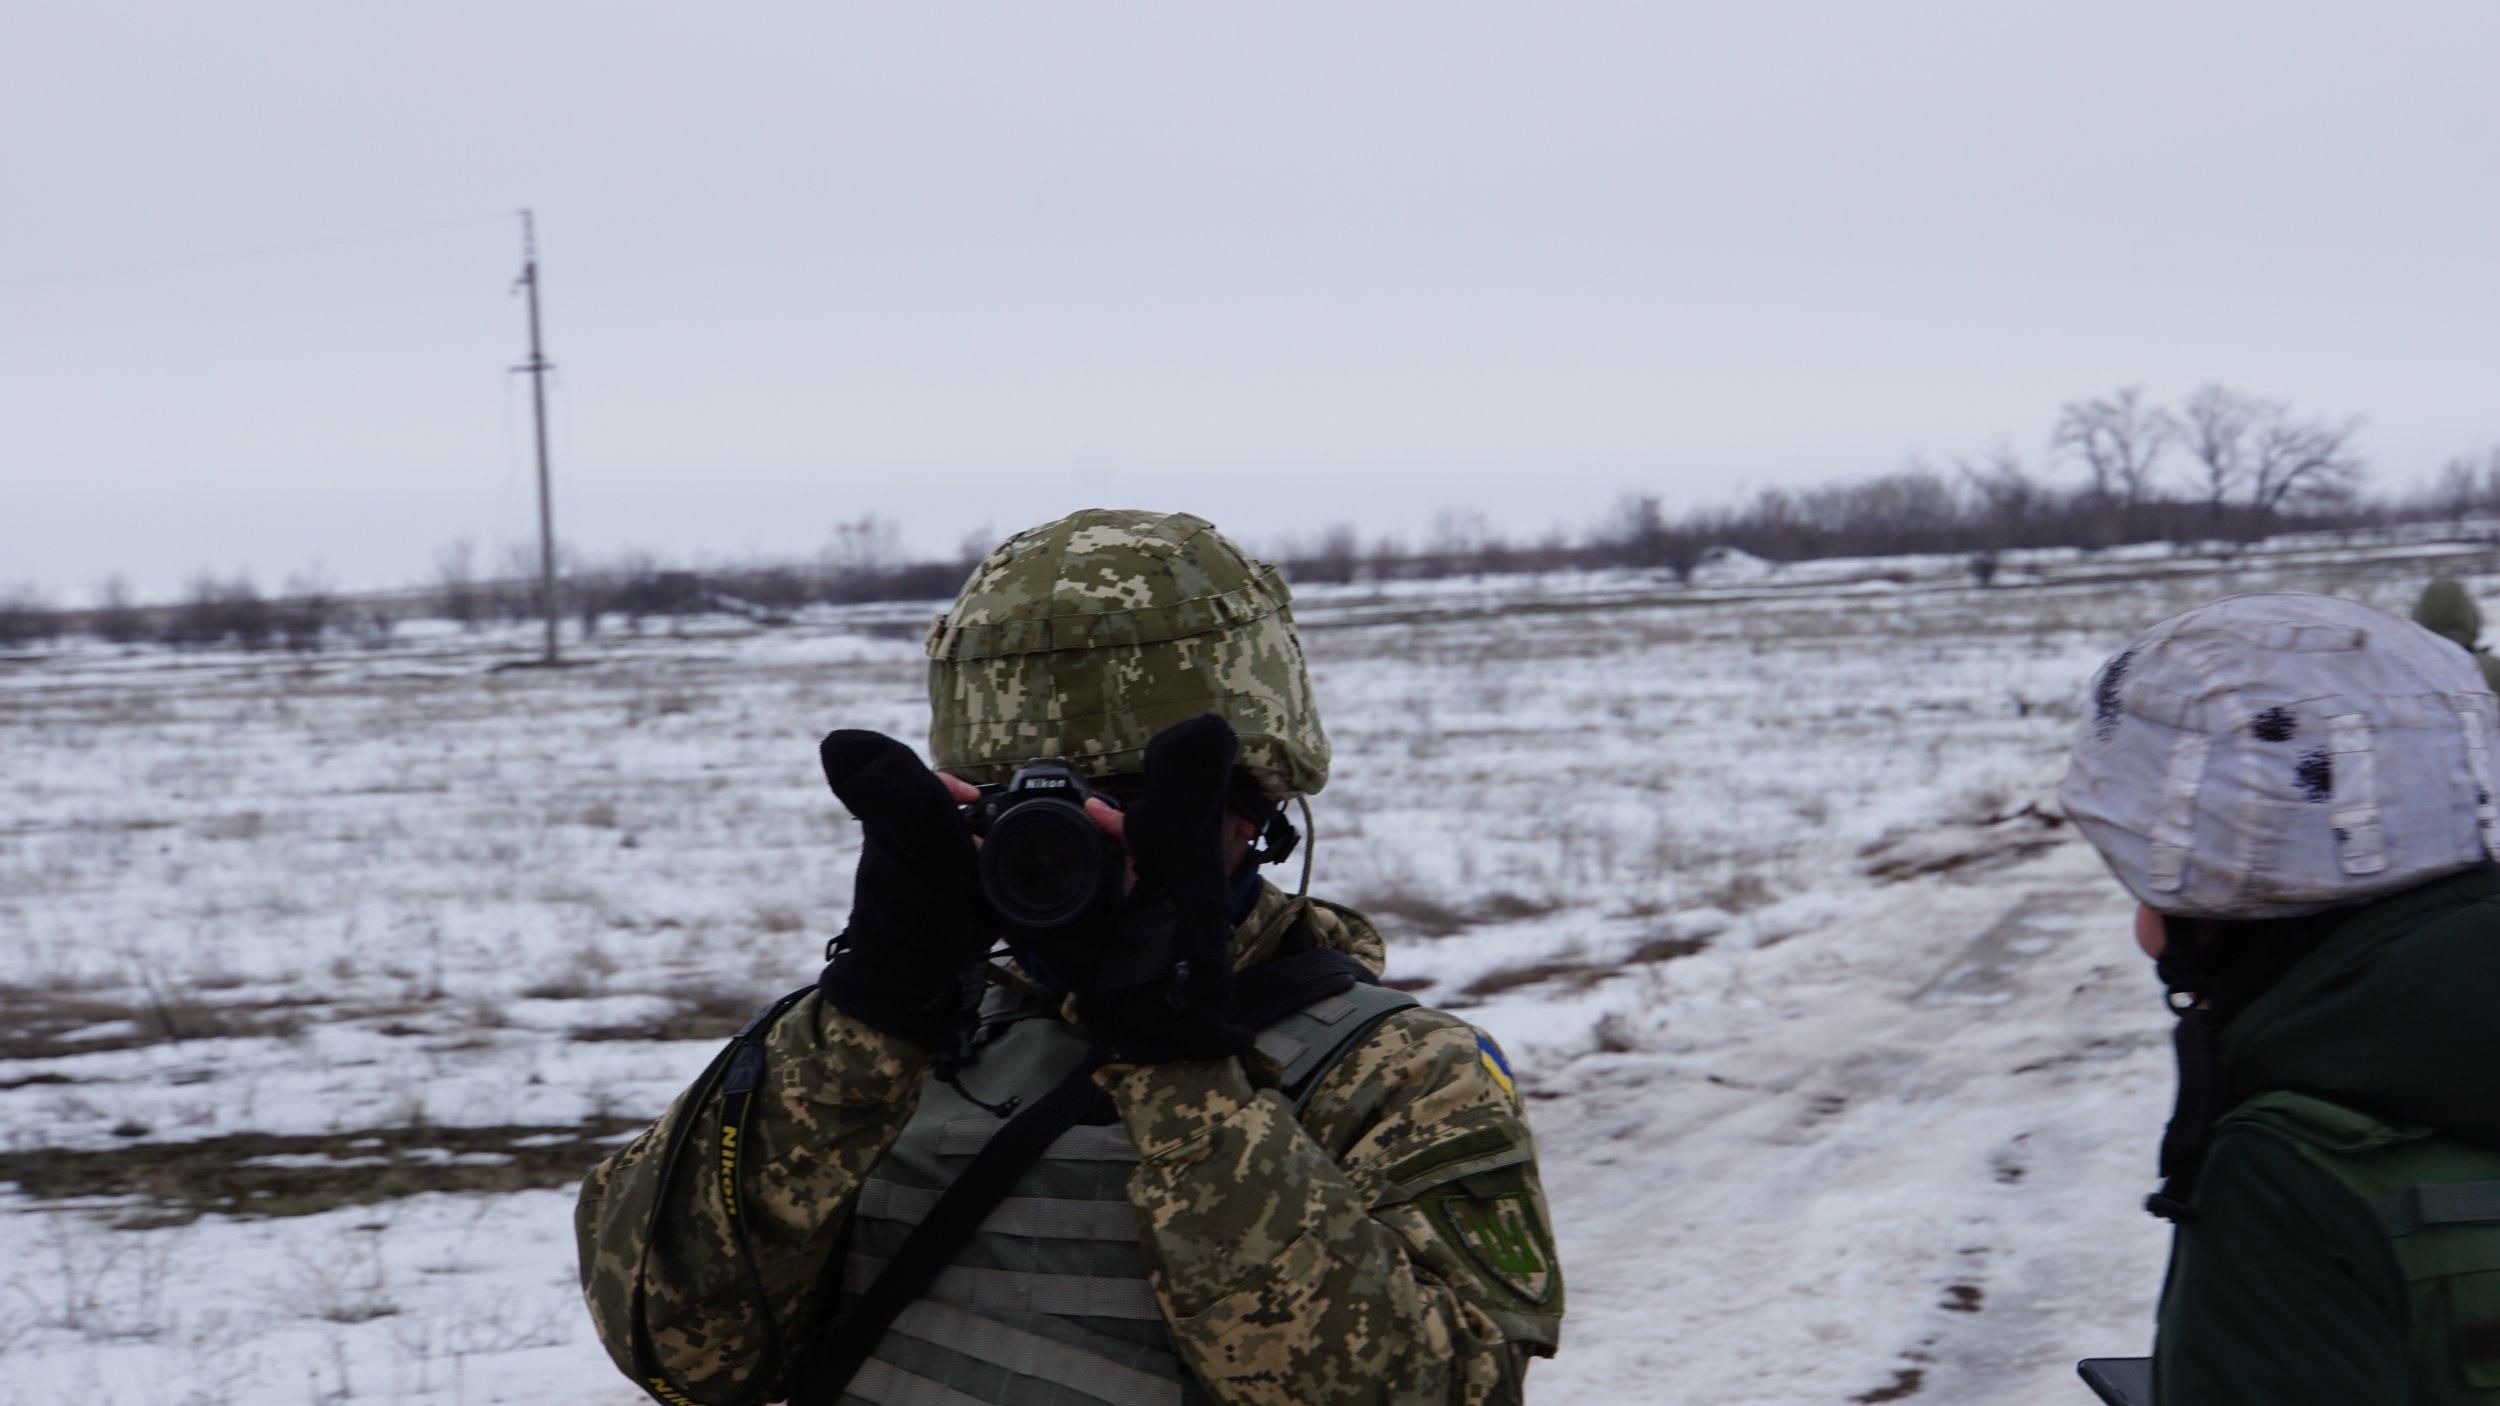 Eastern Ukraine: Ukrainian official warns of "most difficult situation" - en